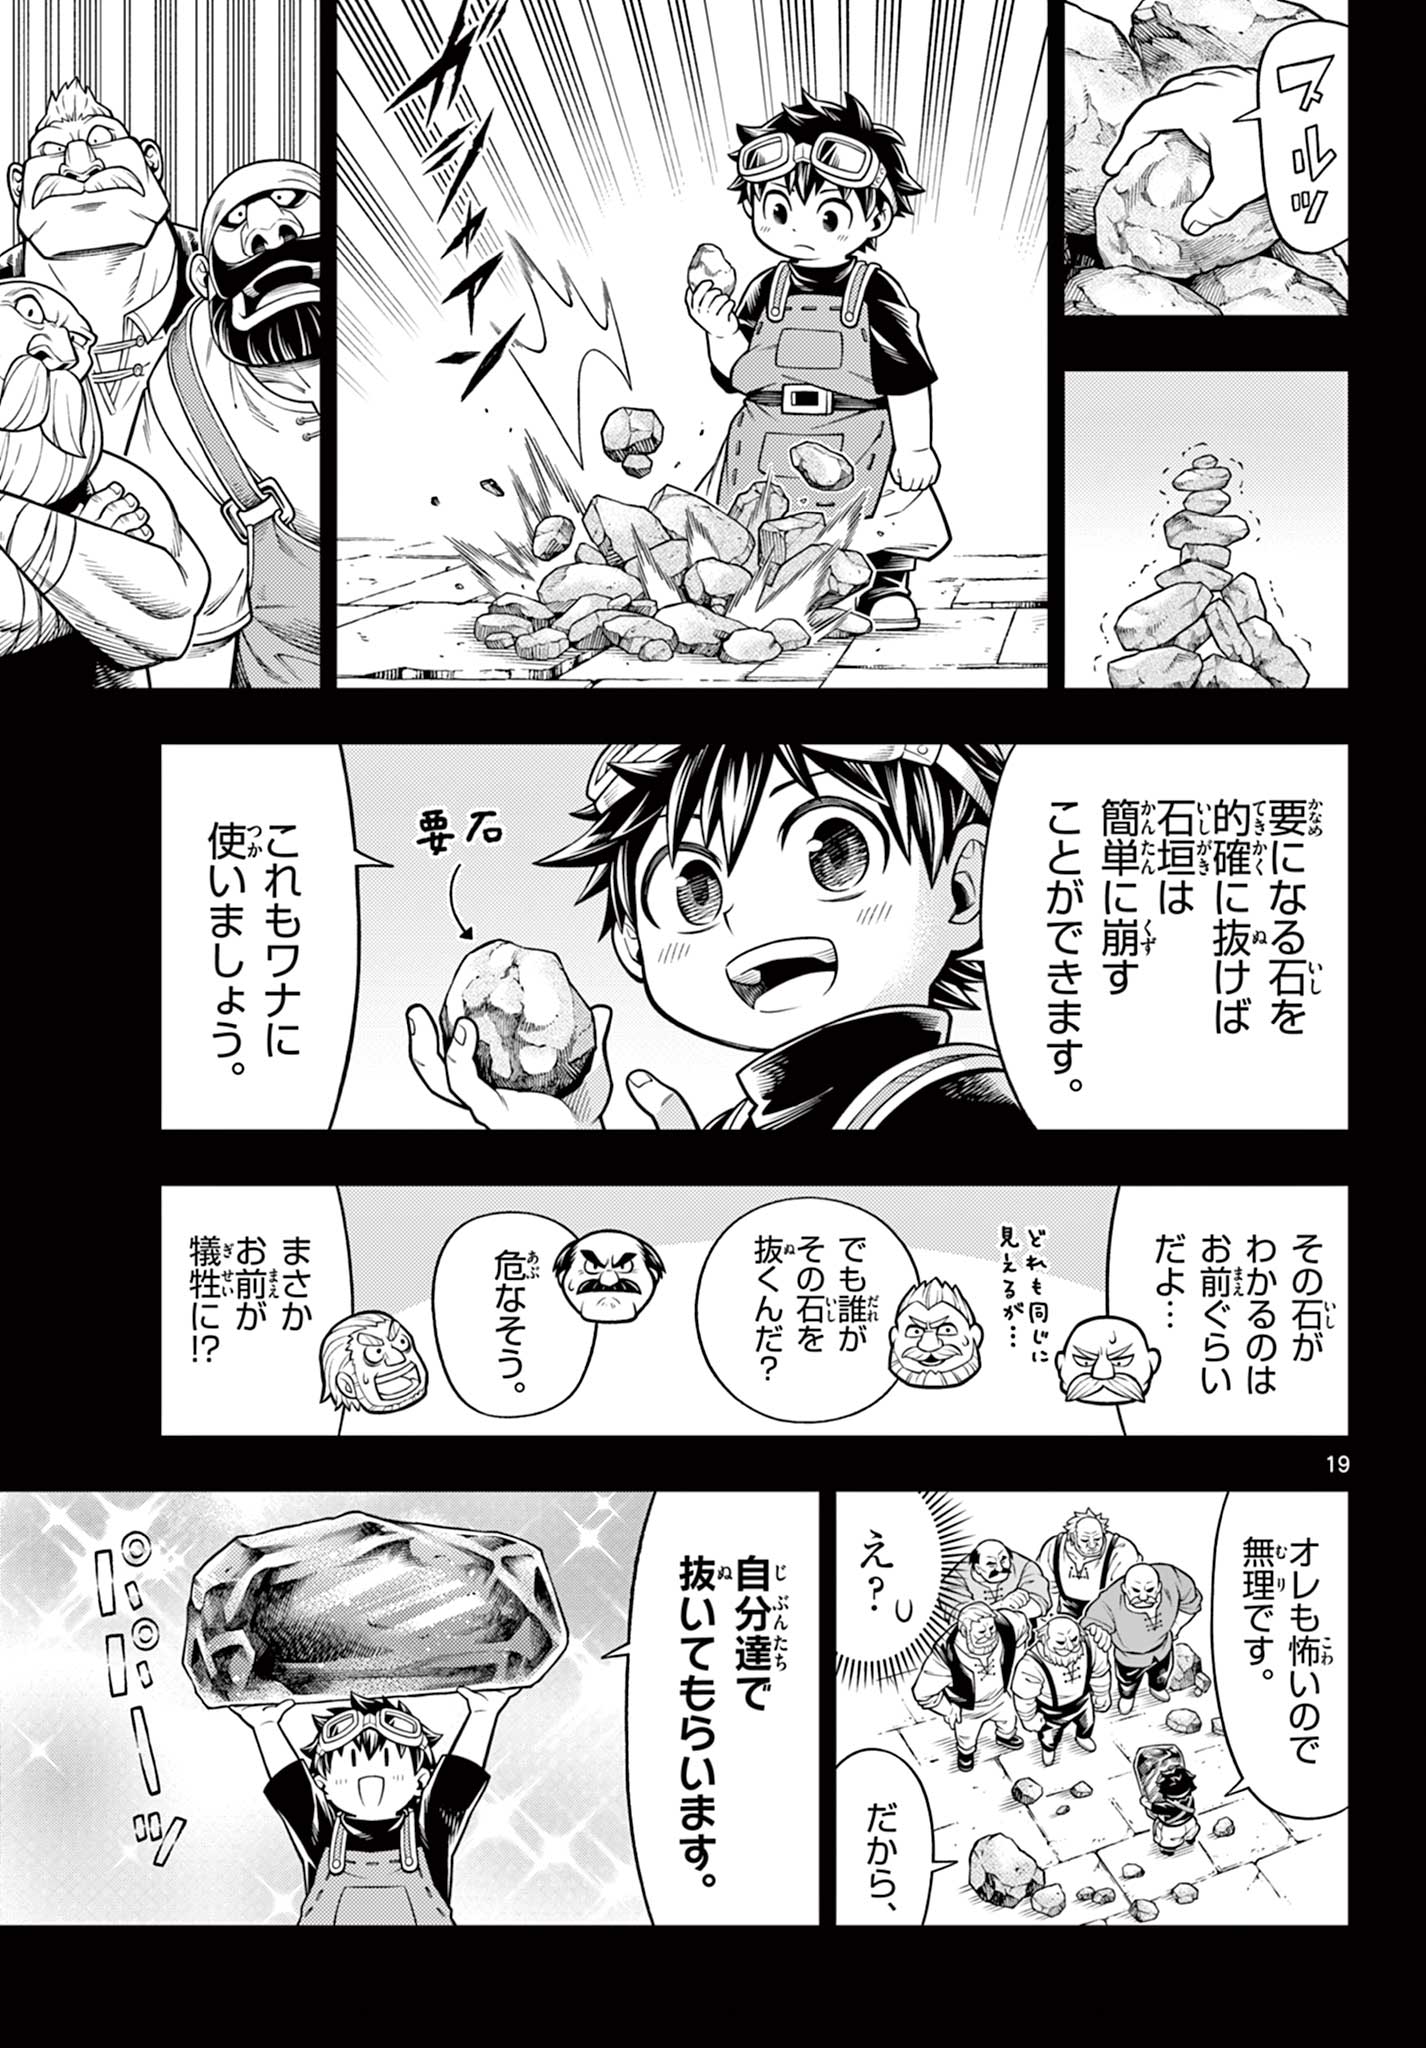 Soara to Mamono no ie - Chapter 27 - Page 19